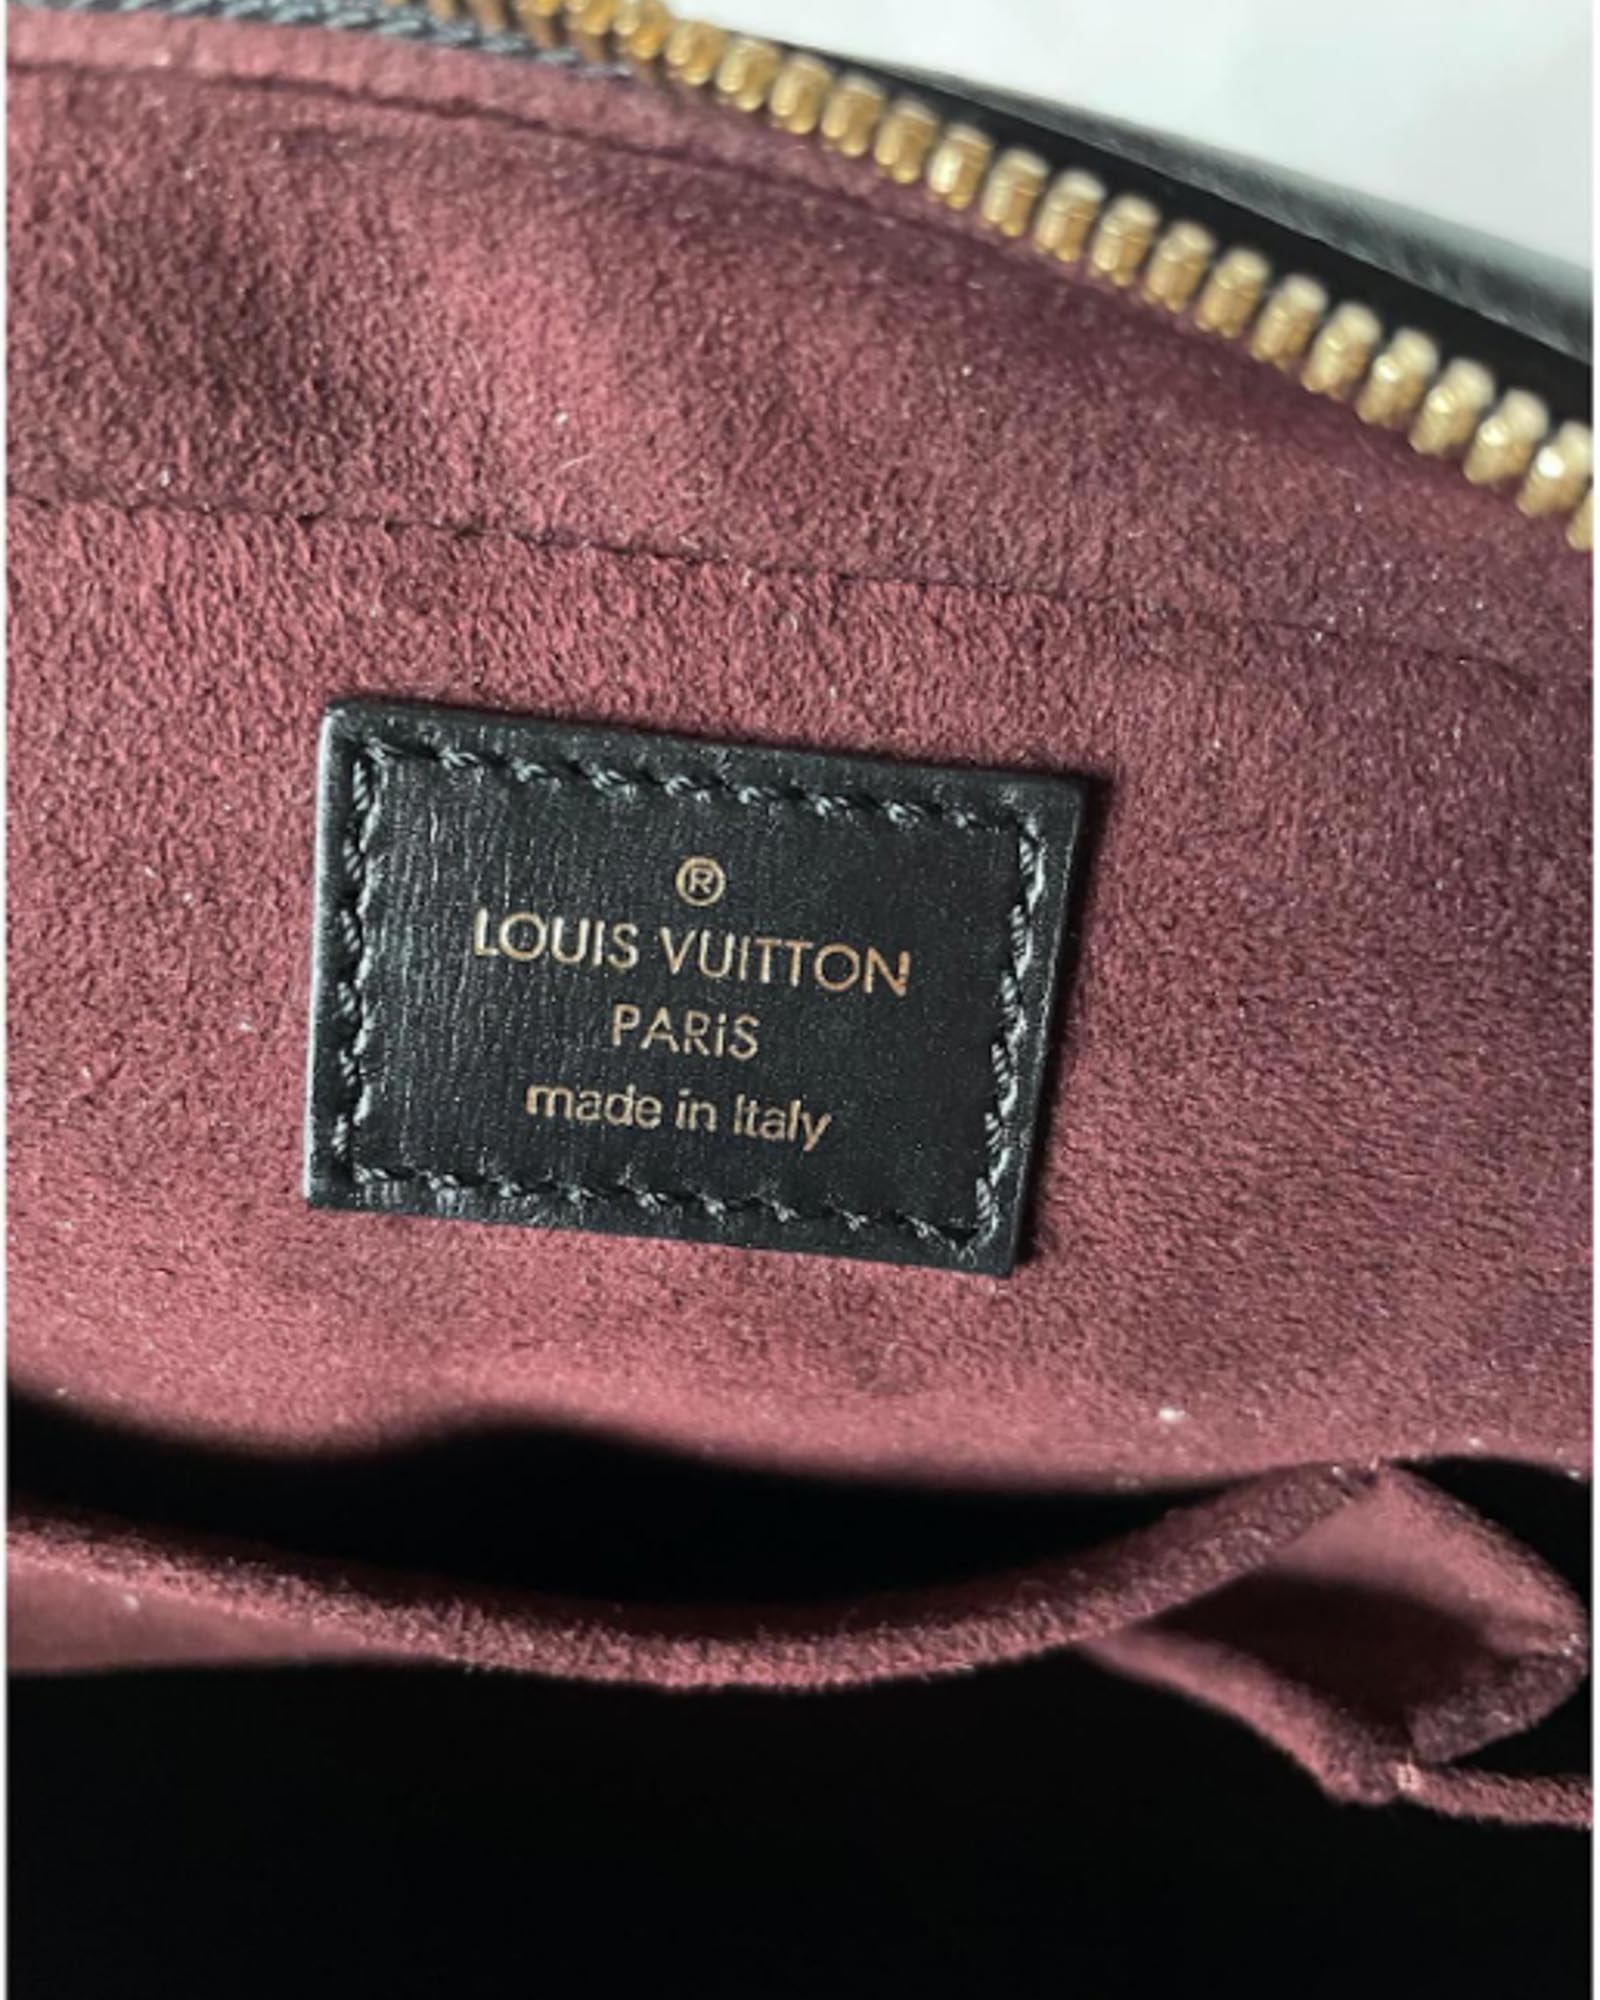 Louis Vuitton Vienna Leather Mizi Satchel Handbag For Sale at